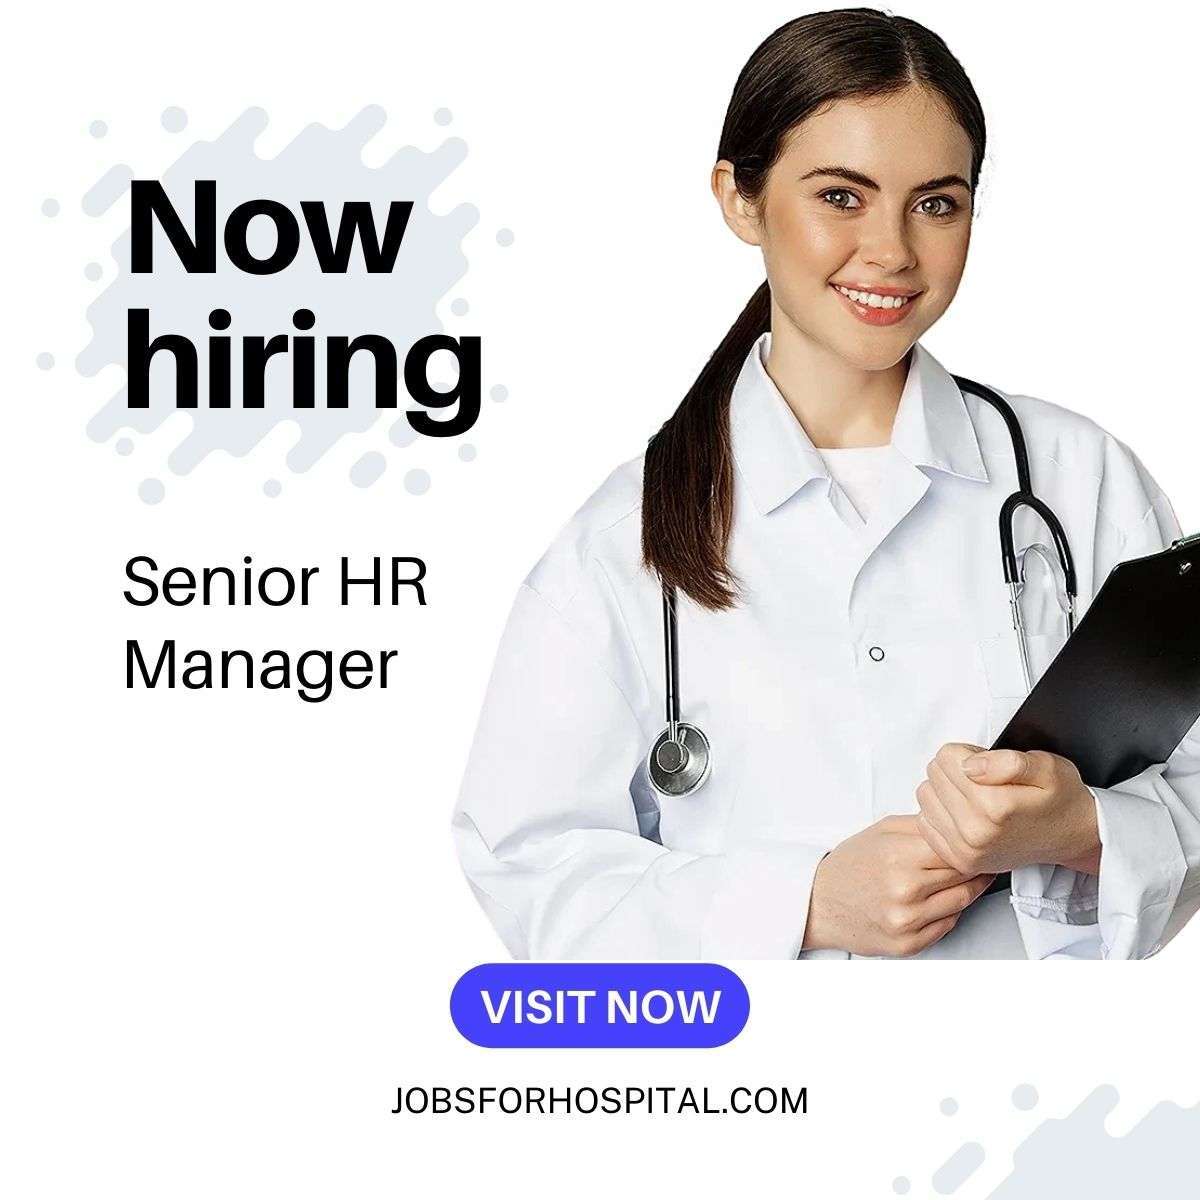 Senior HR Manager. JOBSFORHOSPITAL.COM